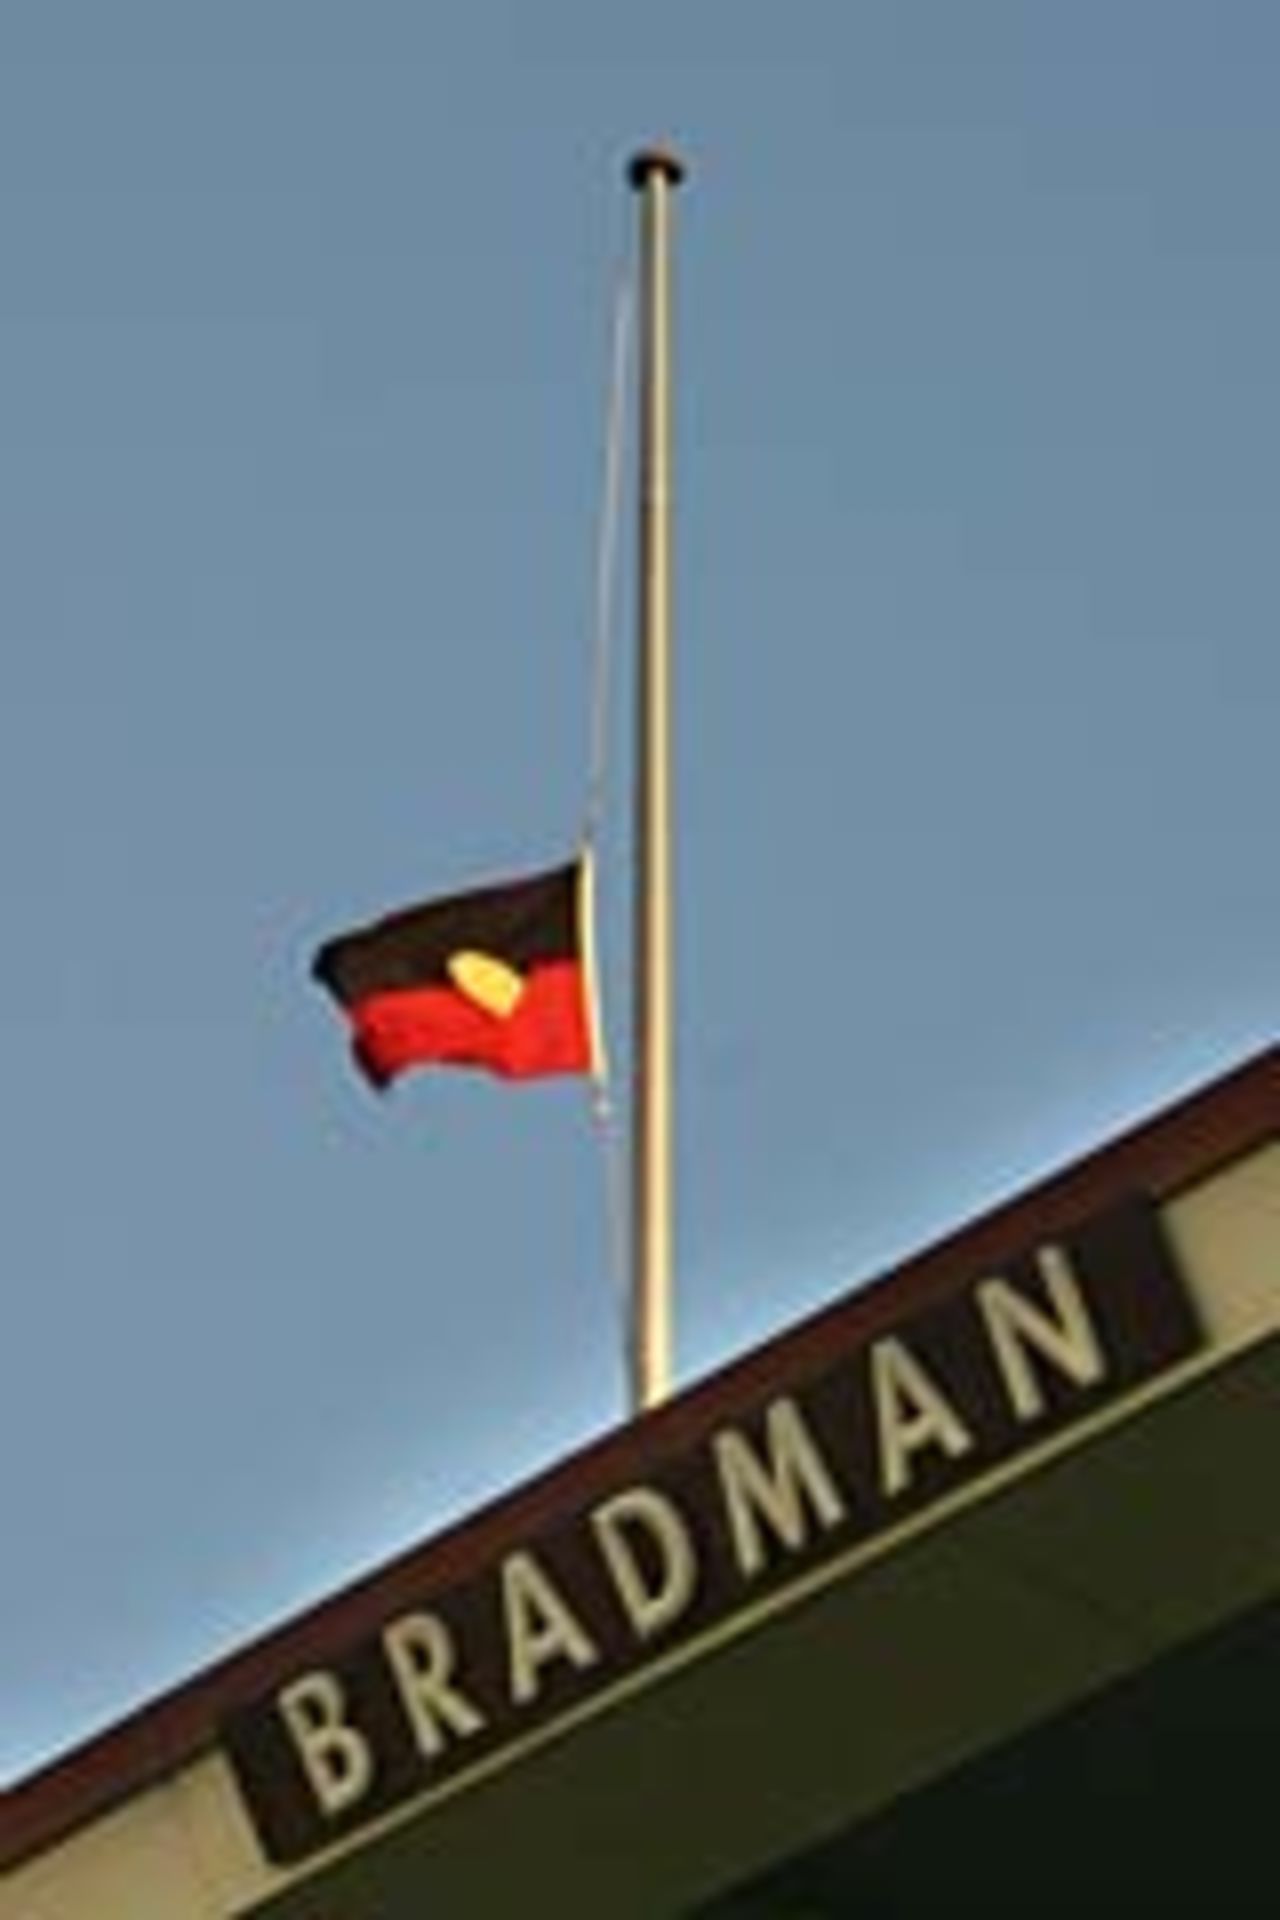 Flag flies at half-mast following the death of Don Bradman, February 2001